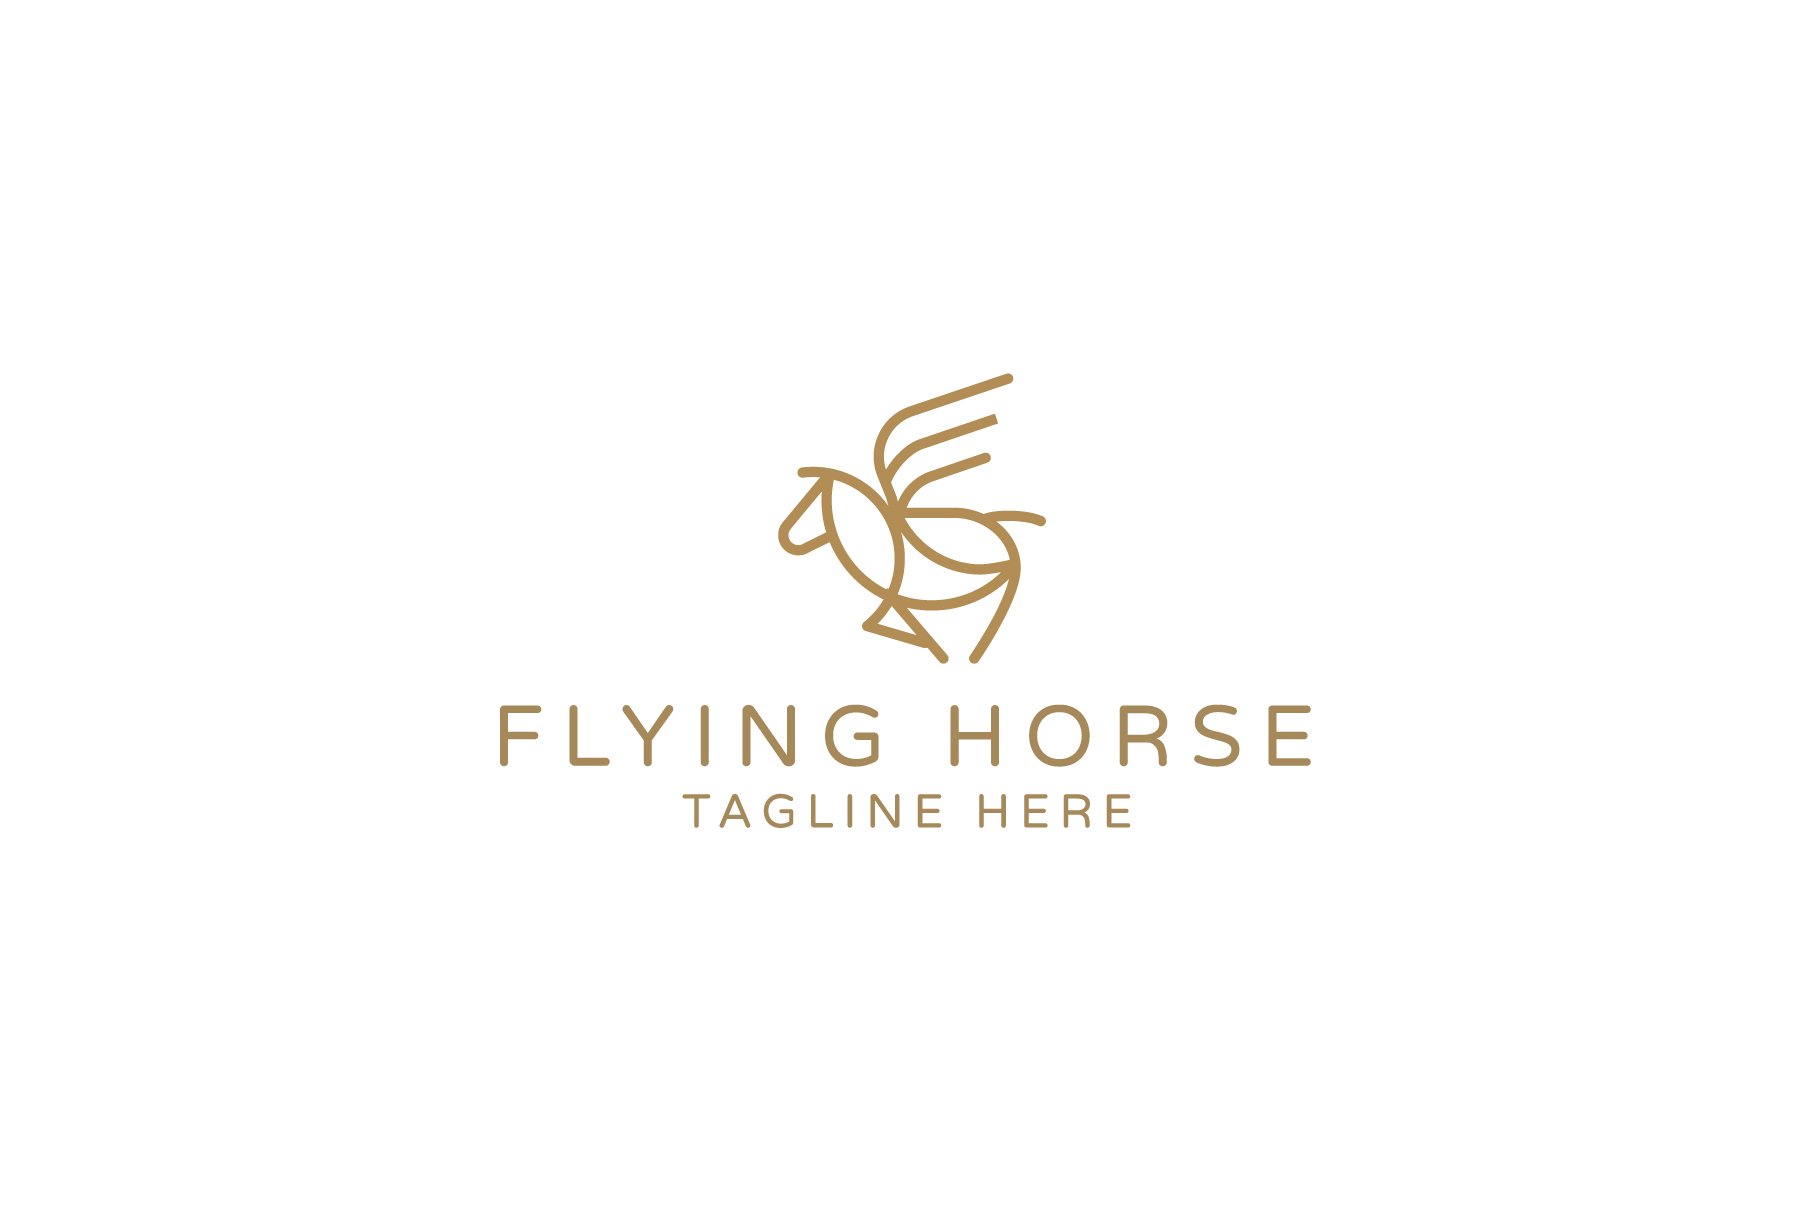 Flying Horse Logo cover image.